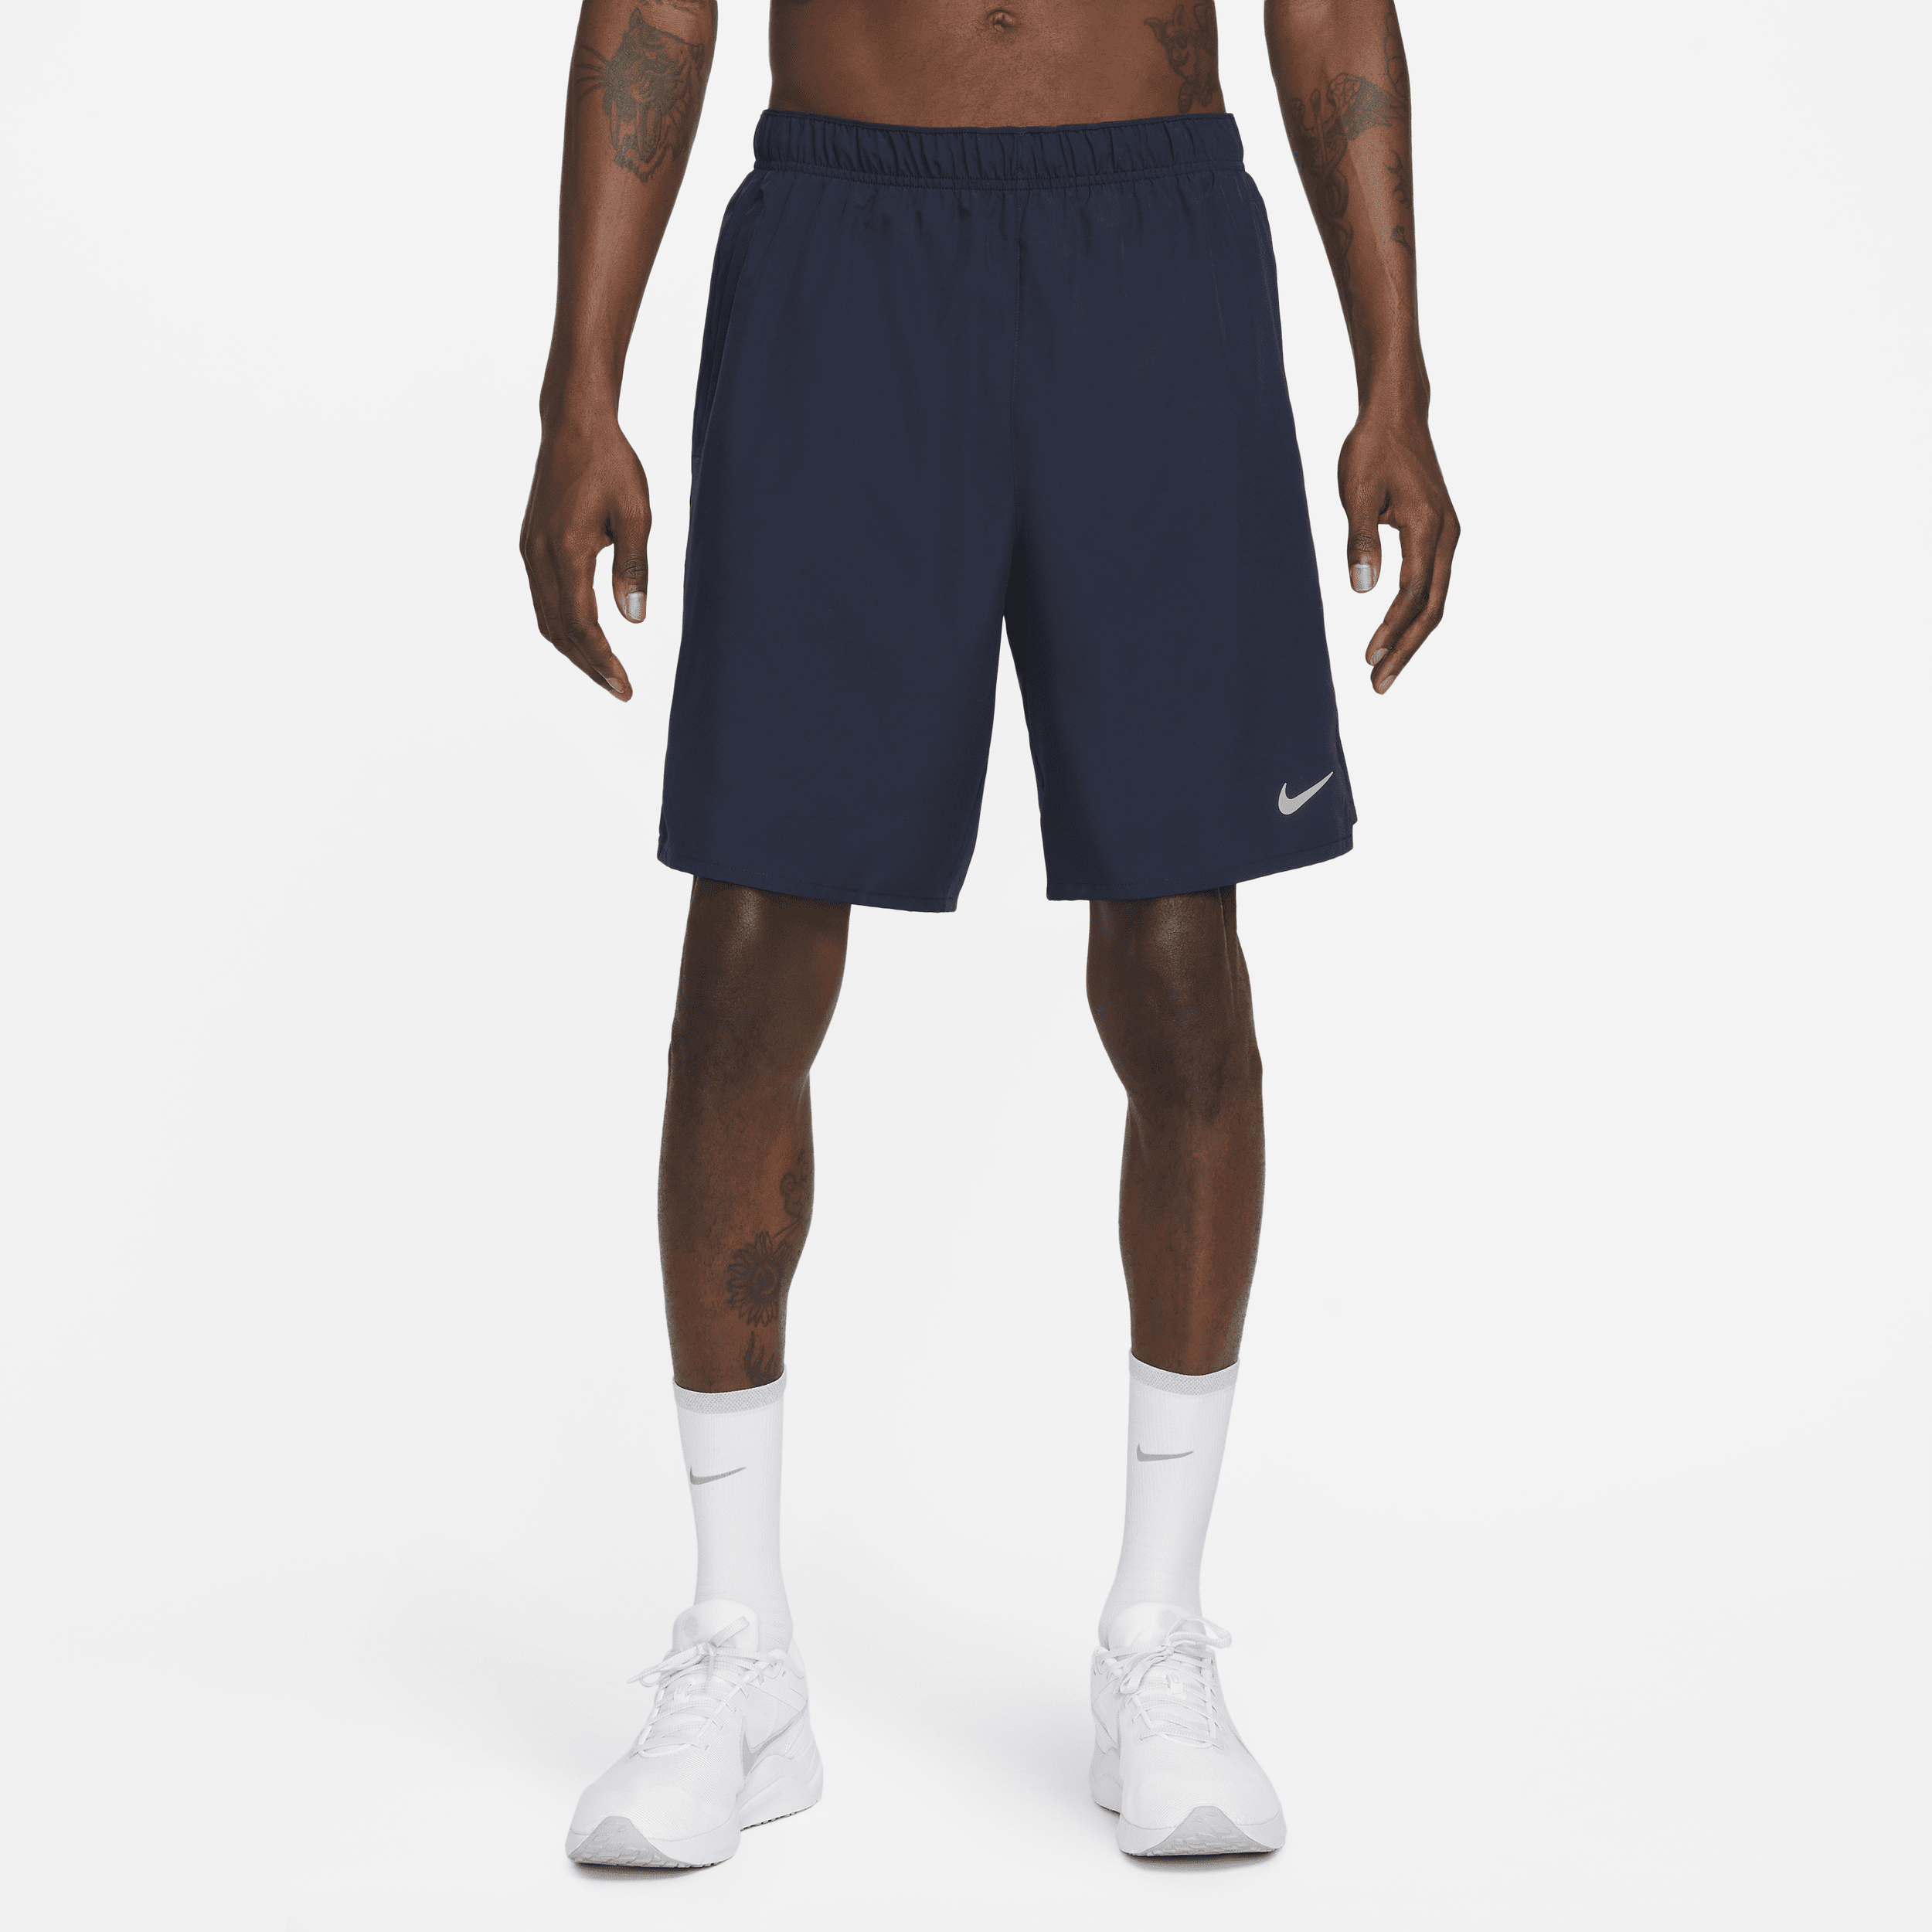 Nike Challenger Pantalón corto Dri-FIT versátil de 23 cm sin forro - Hombre - Azul